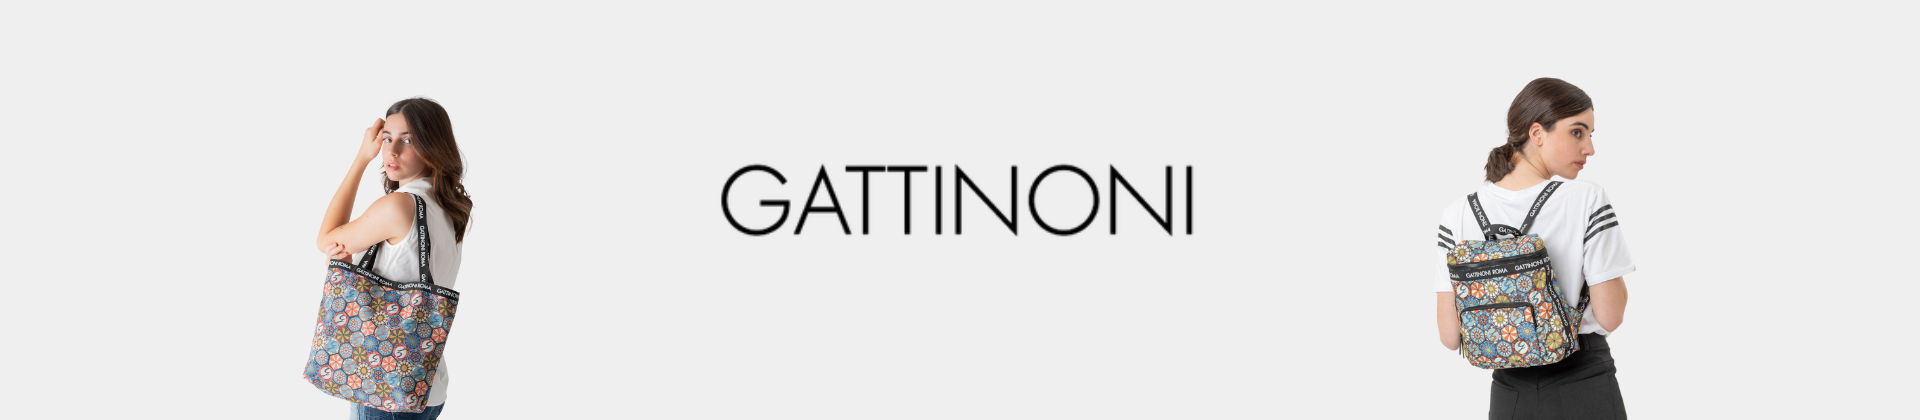 Gattinoni Borse Shop Online Donna | Youngshoessalerno.it